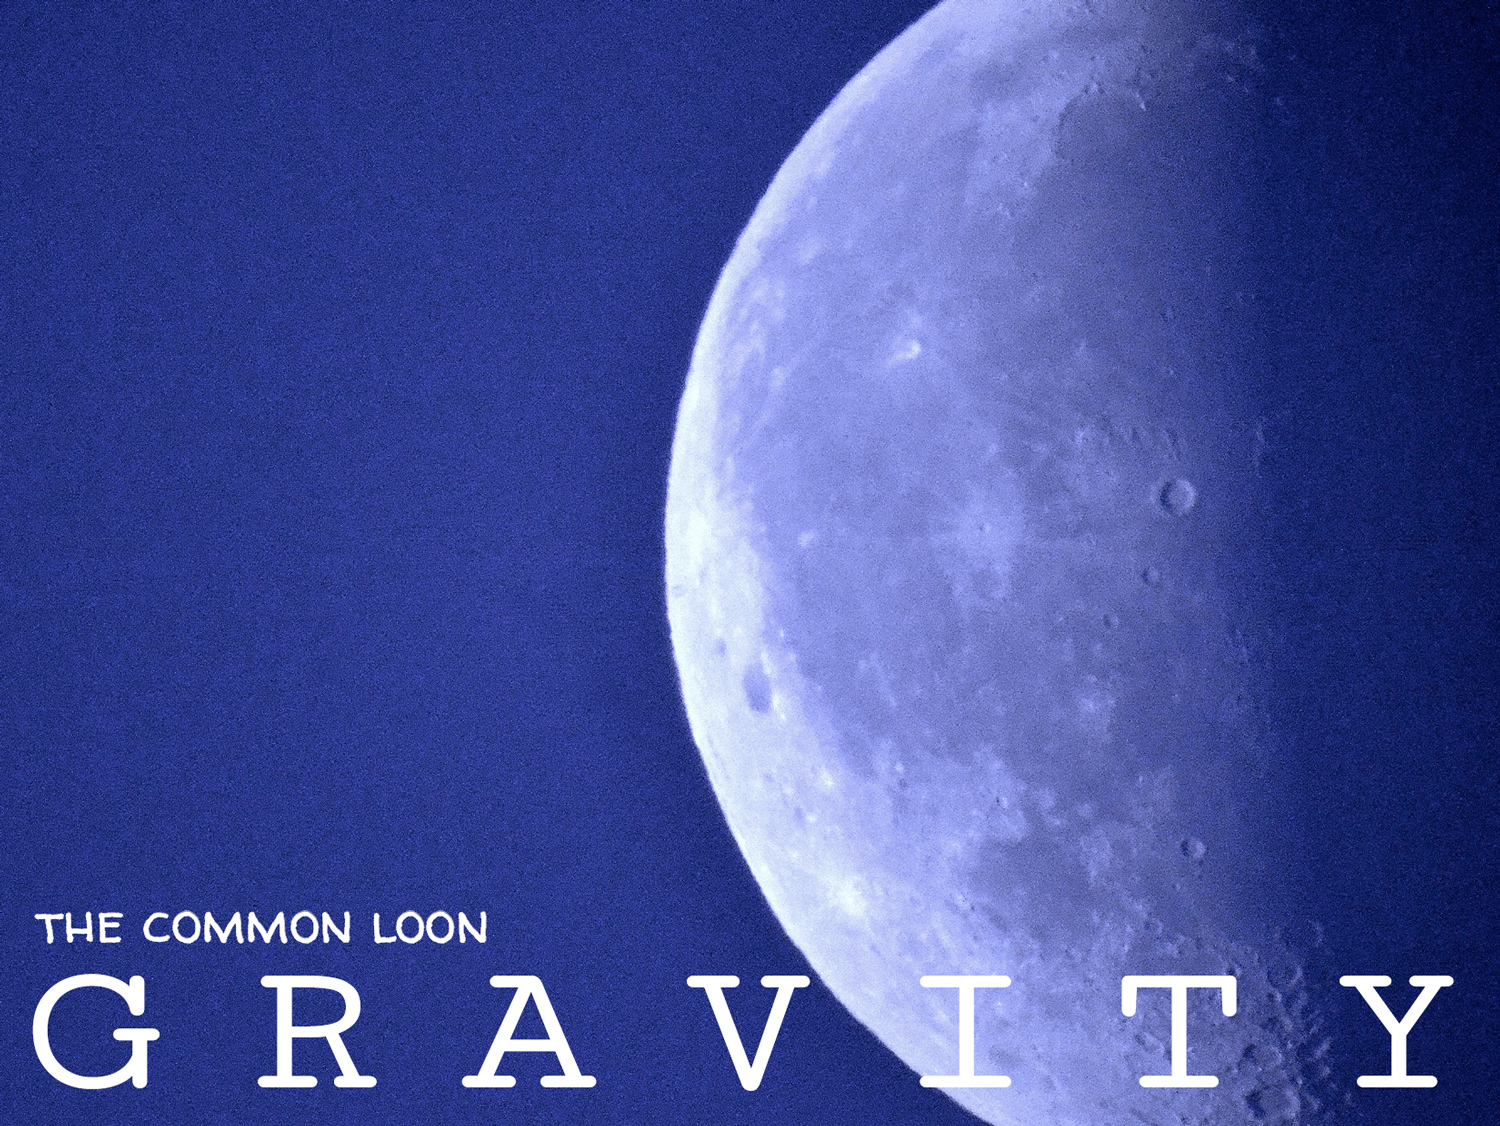 The Common Loon - Gravity (Music Album Art), by Tara Marolf & Billy Reiter